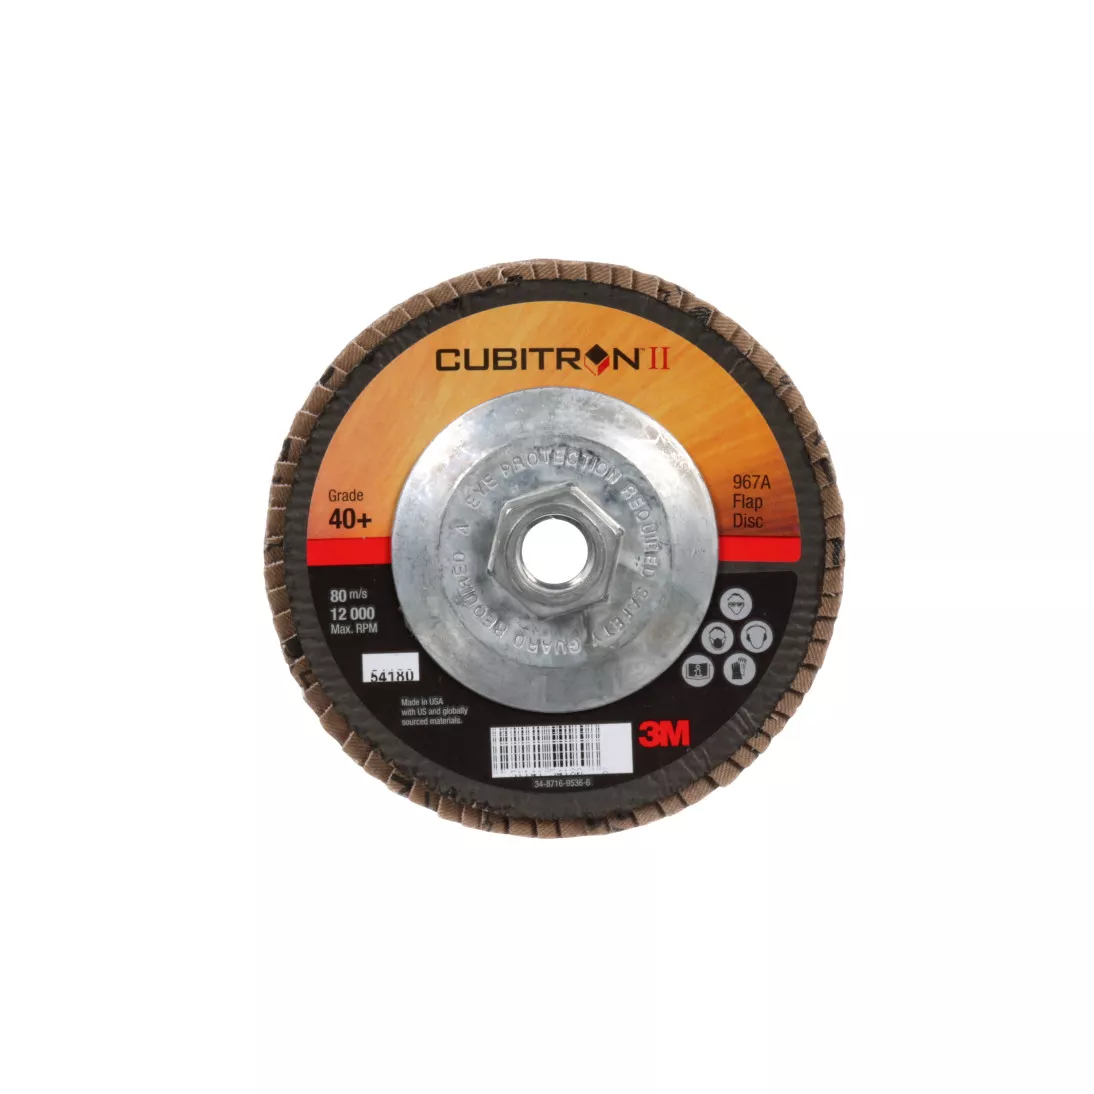 3M™ Cubitron™ II Flap Disc 967A, 40+, T29 Quick Change, 5 in x 5/8